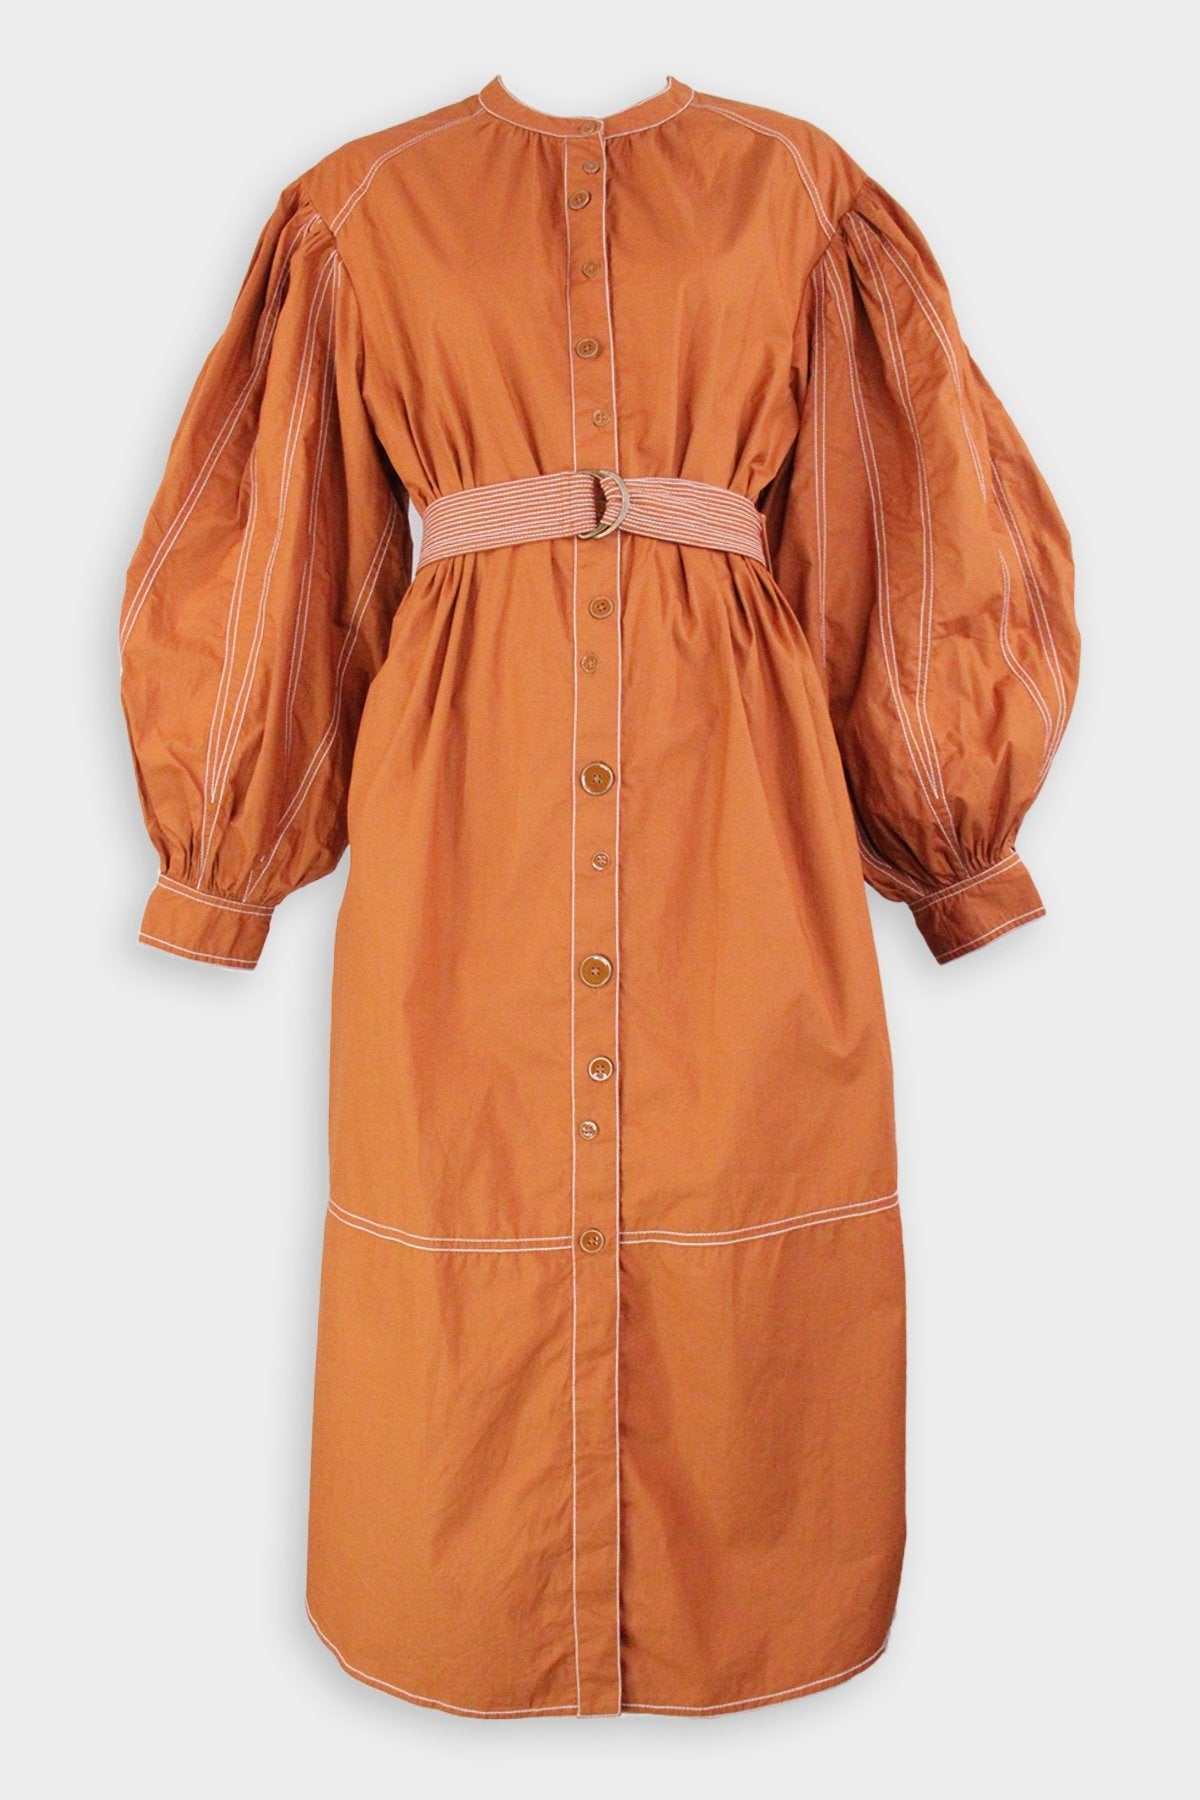 Maia Dress in Sumac - shop-olivia.com